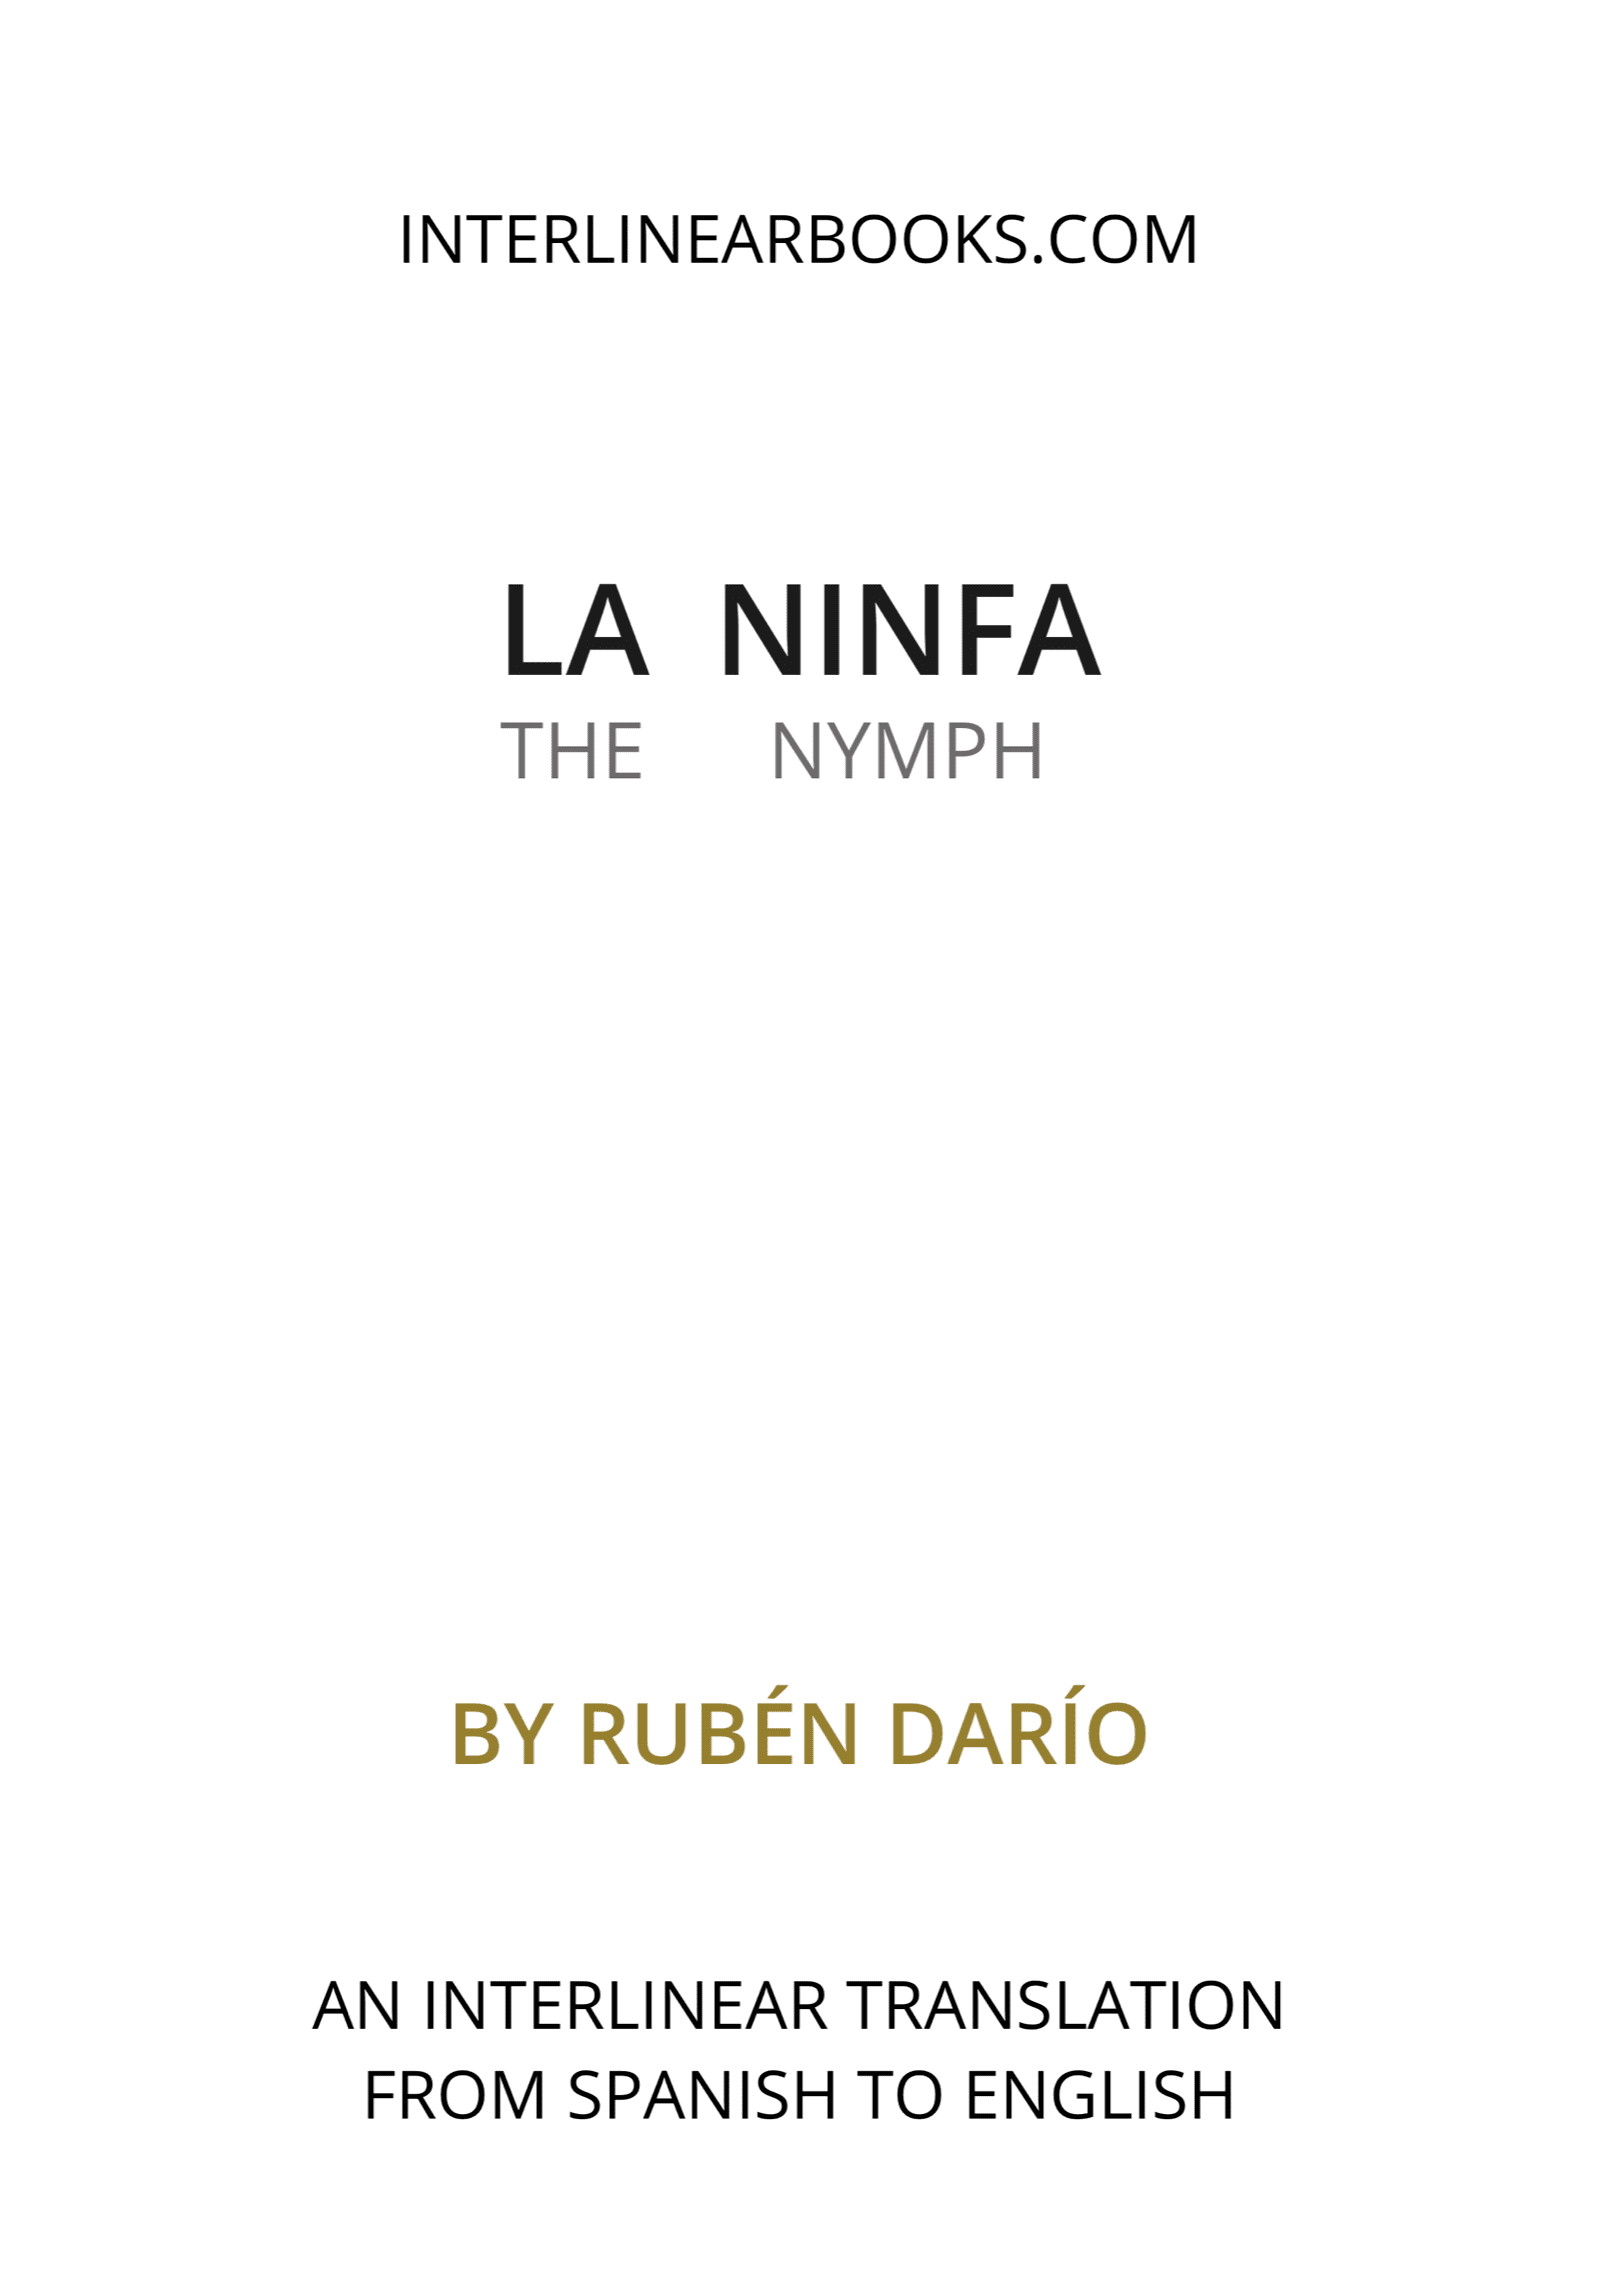 Spanish book: La ninfa / The Nymph